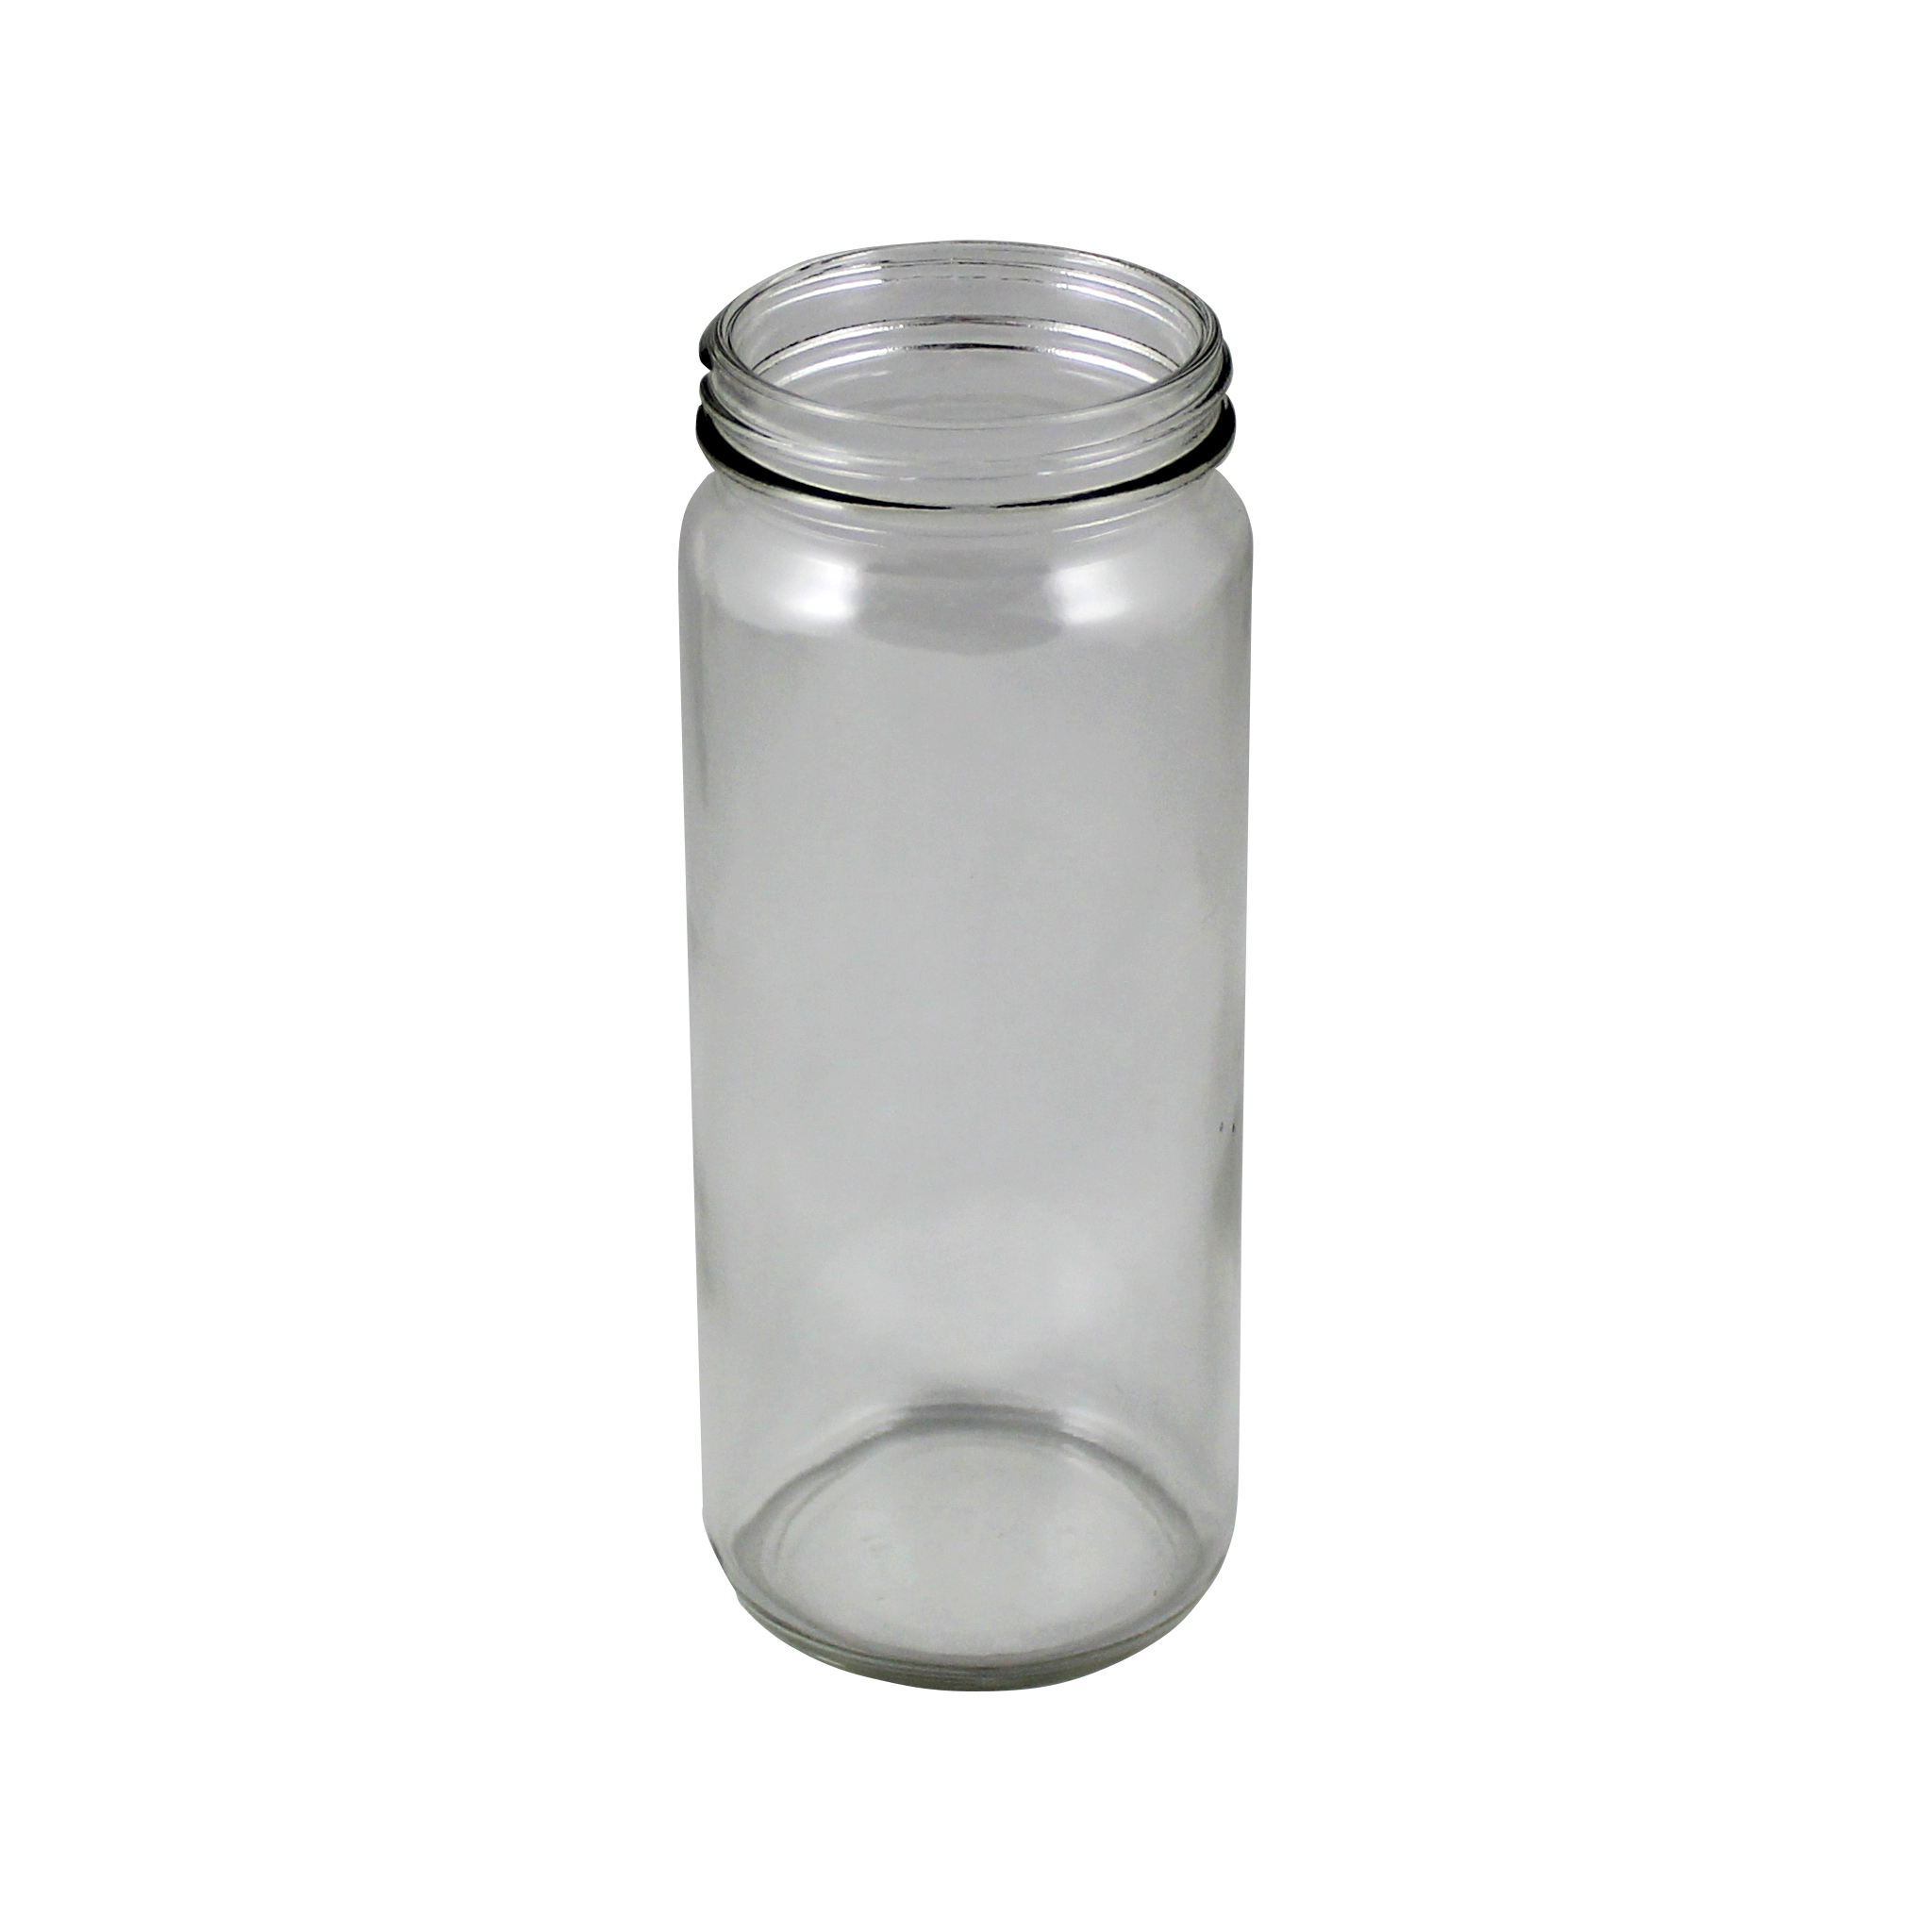 16oz Paragon Clear Glass Jar at